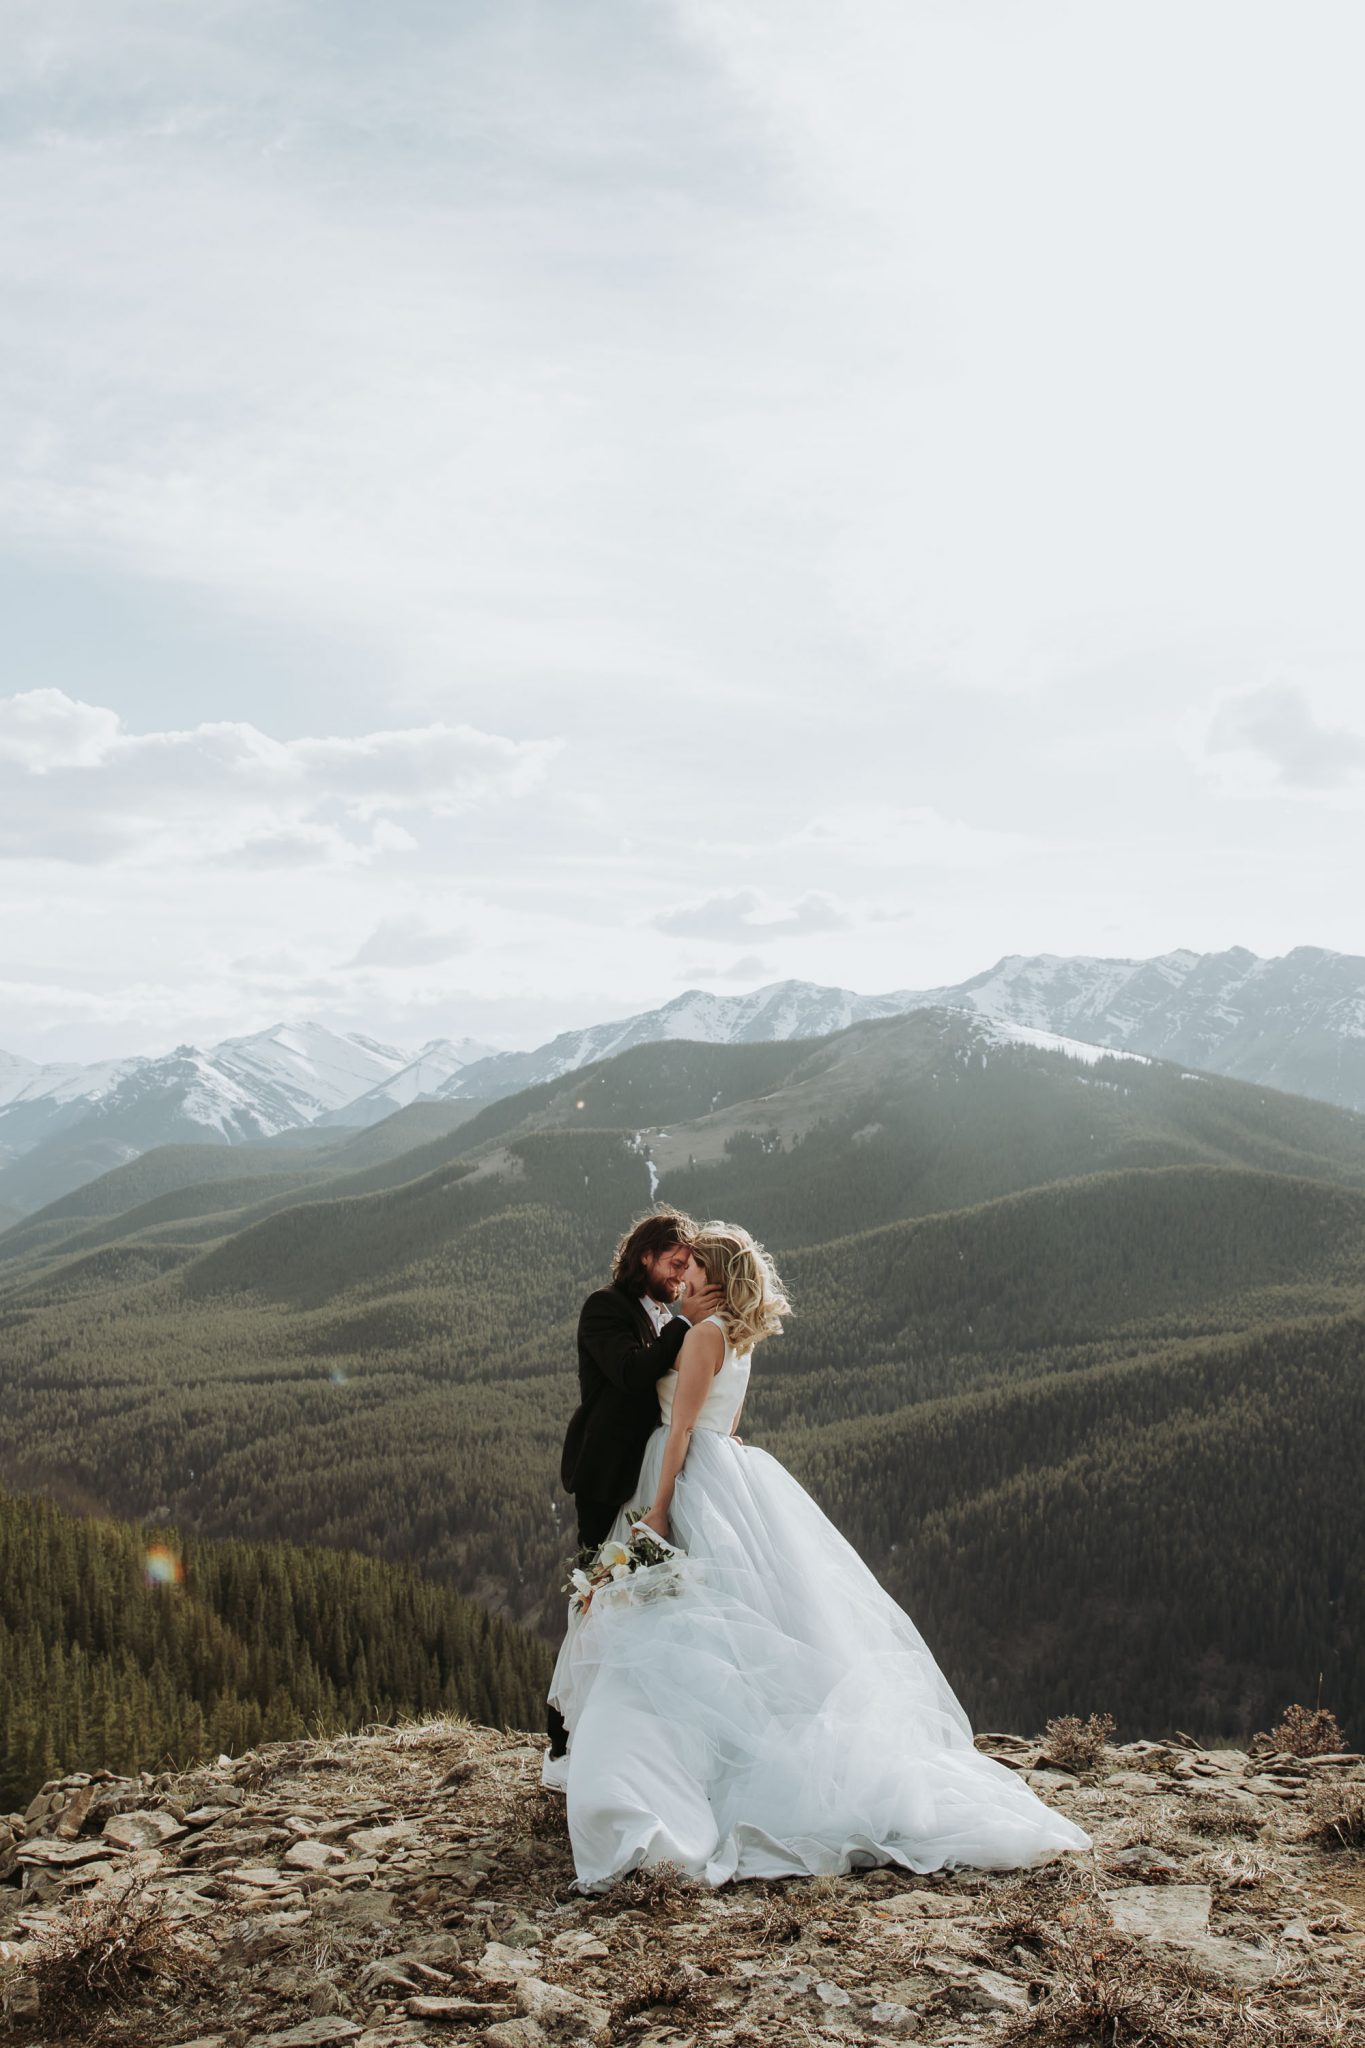 Mountaintop Wedding Inspiration Mountainous Adventure Session featuring Contemporary Attire & Alberta Views Featured on Bronte Bridë